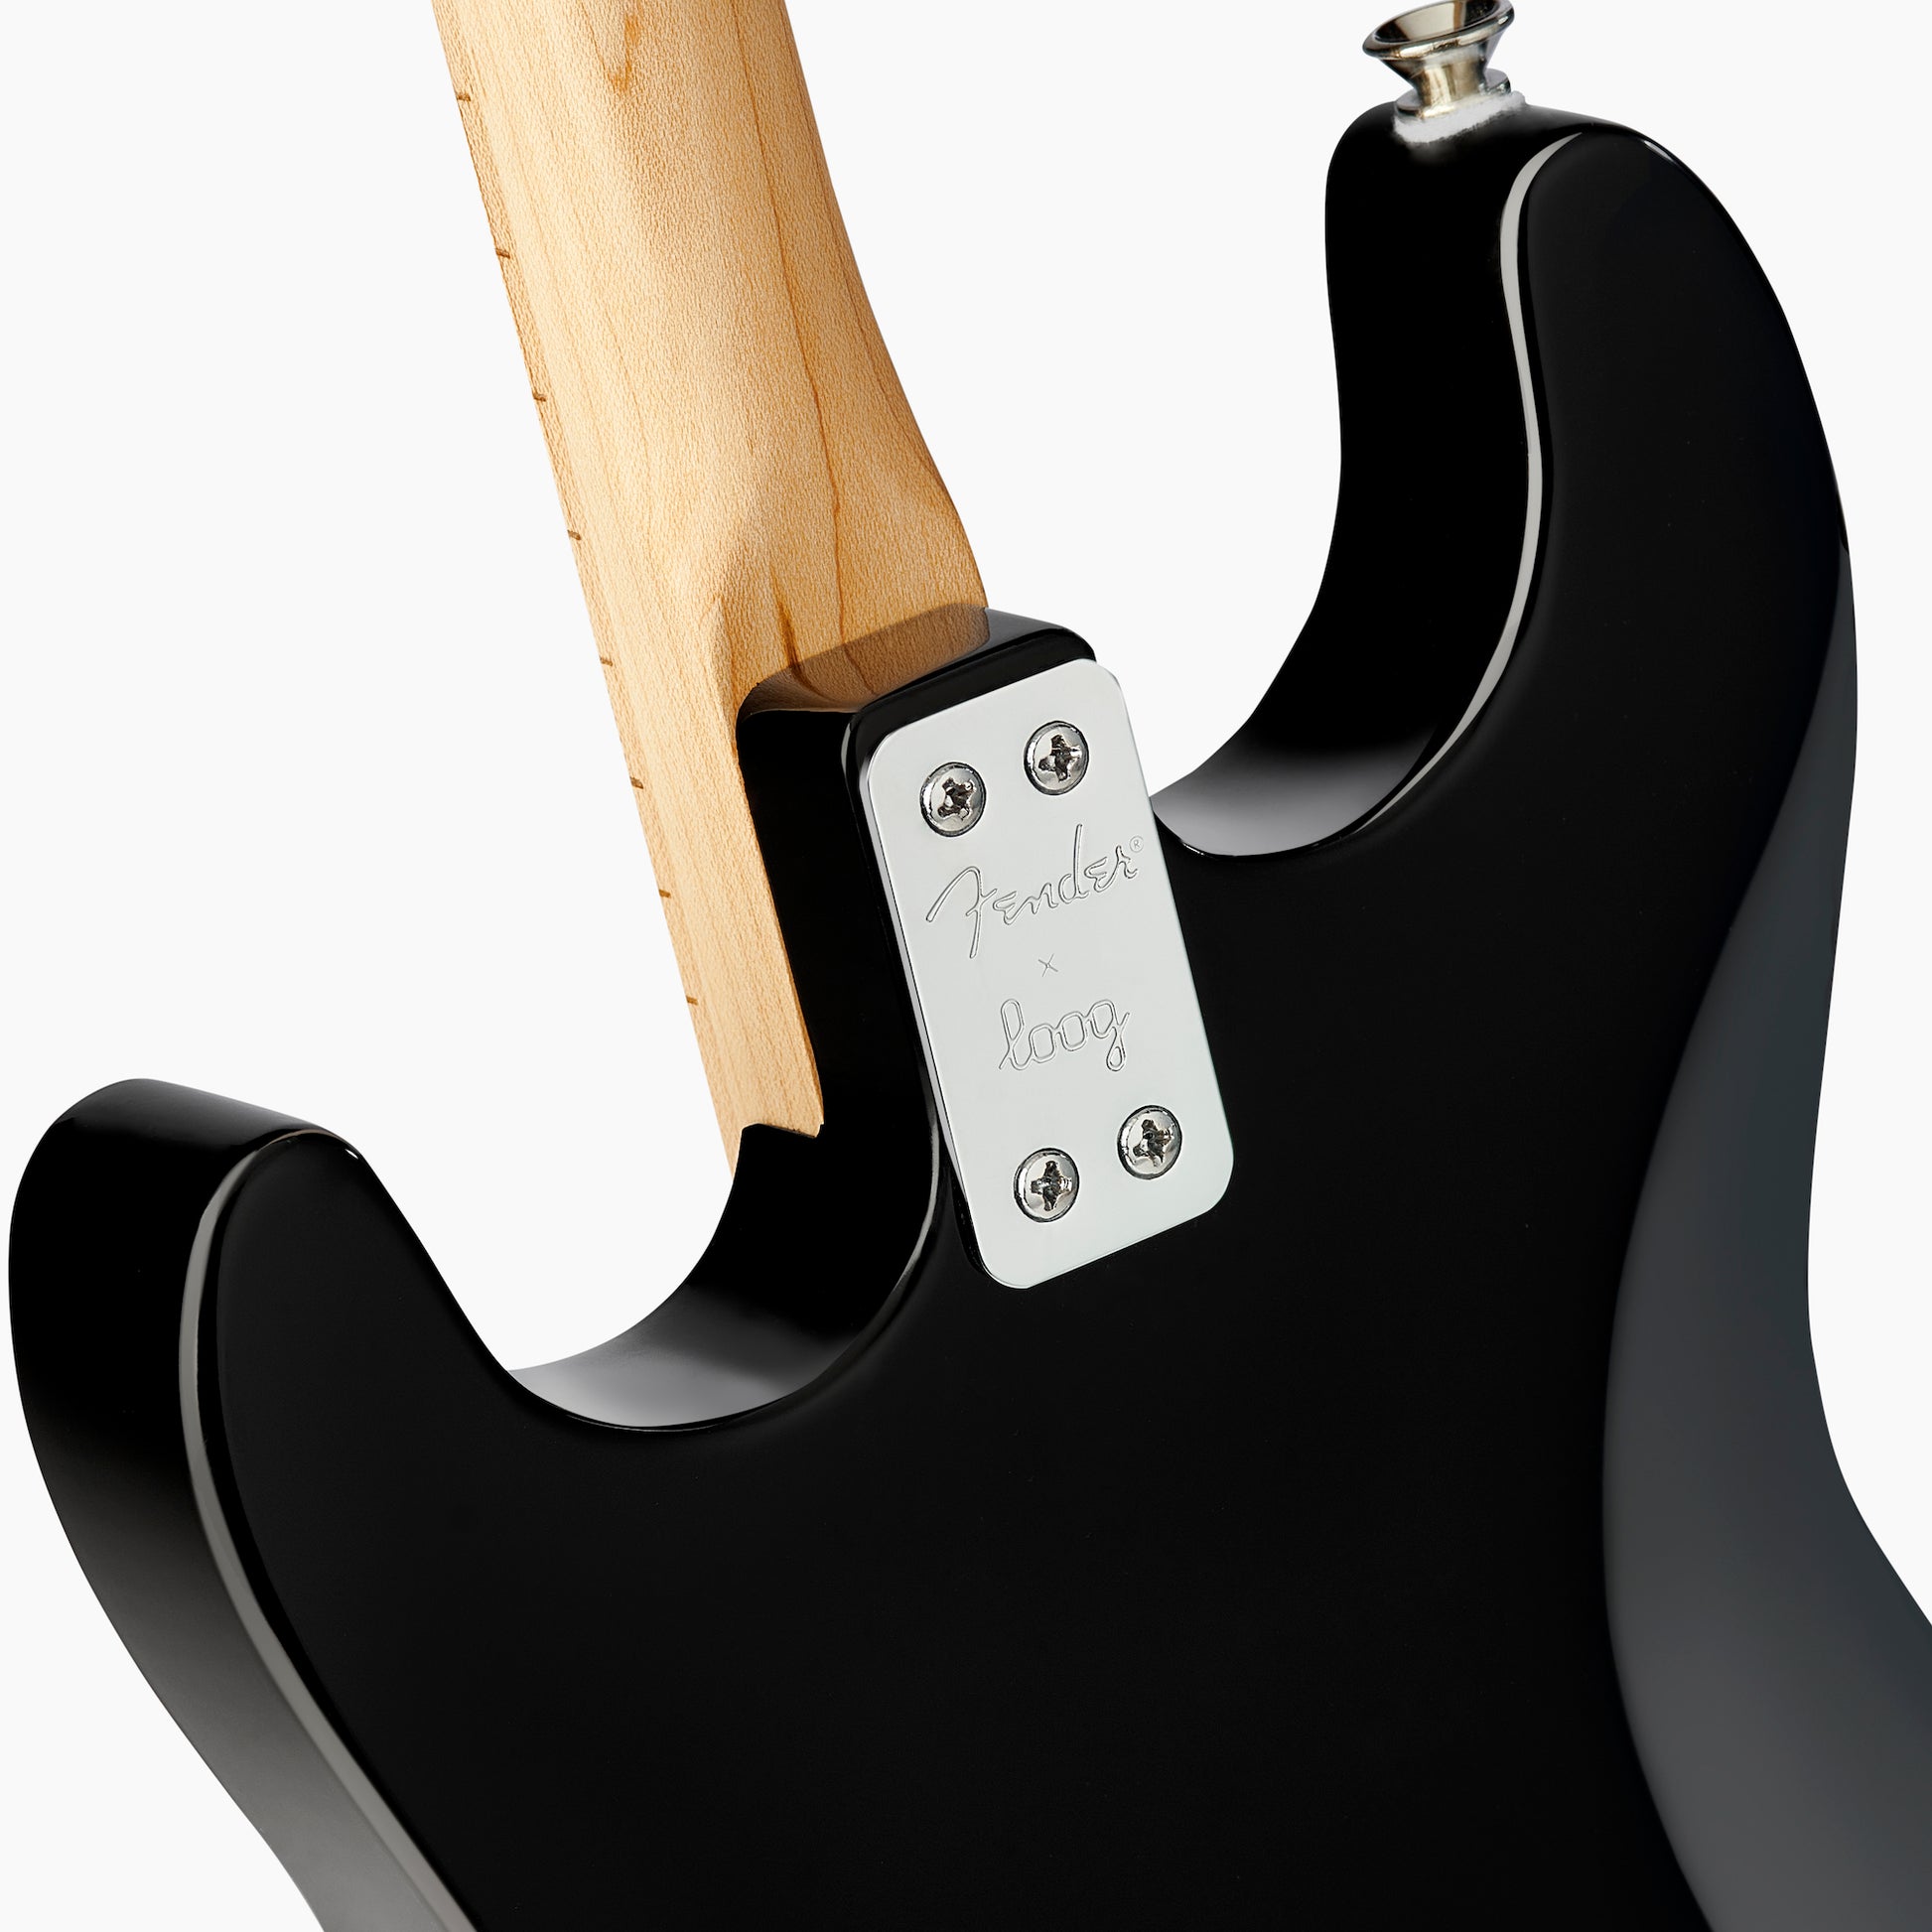 Fender American Standard Stratocaster Stock Photo - Download Image